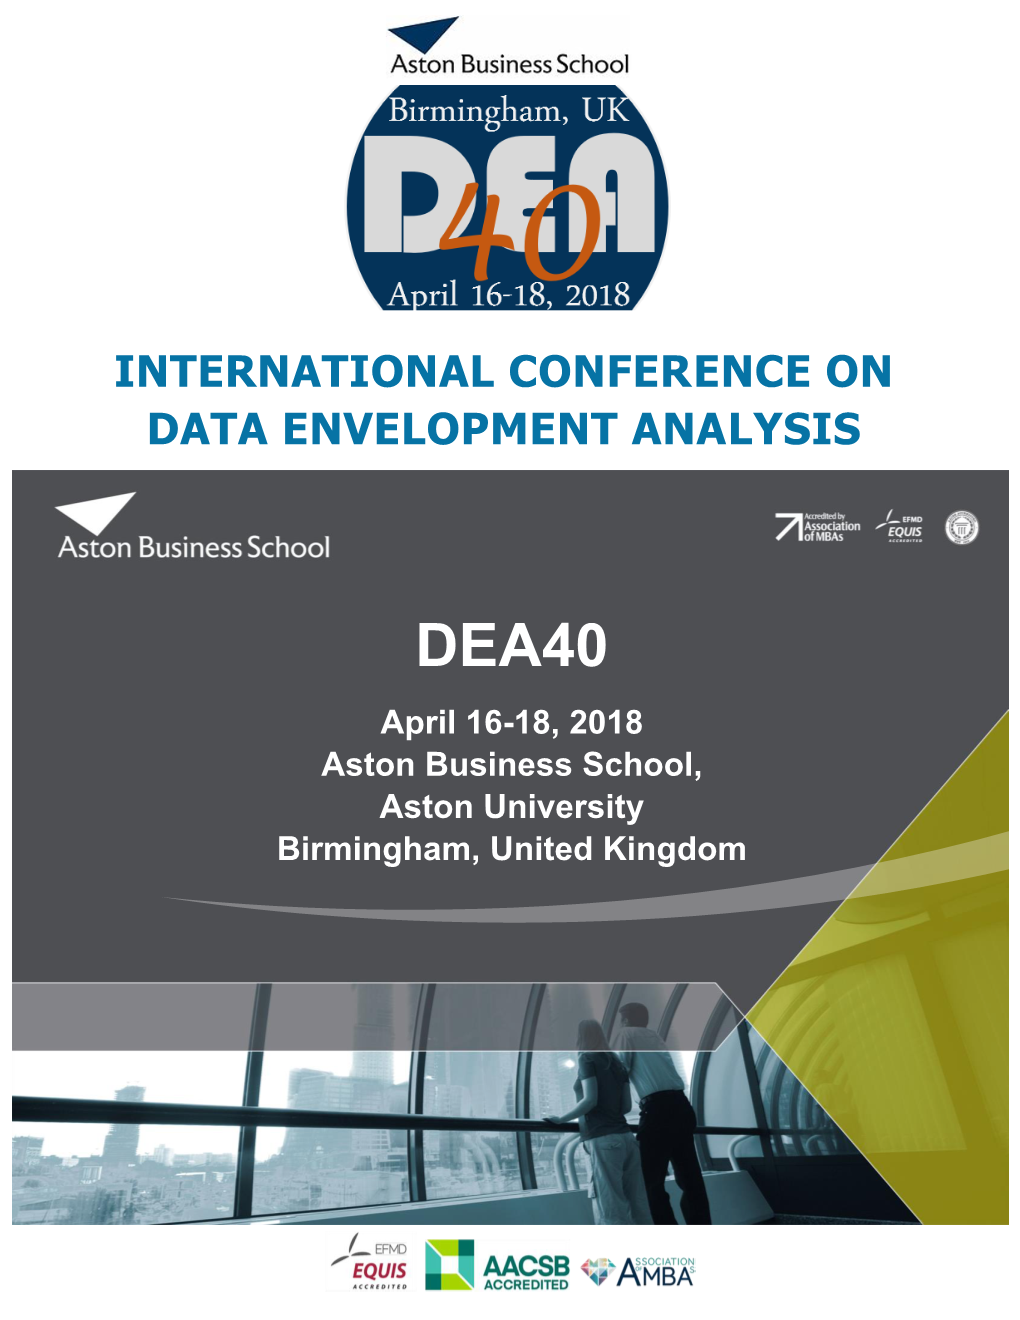 DEA40: International Conference on Data Envelopment Analysis, at Aston Business School, Aston University